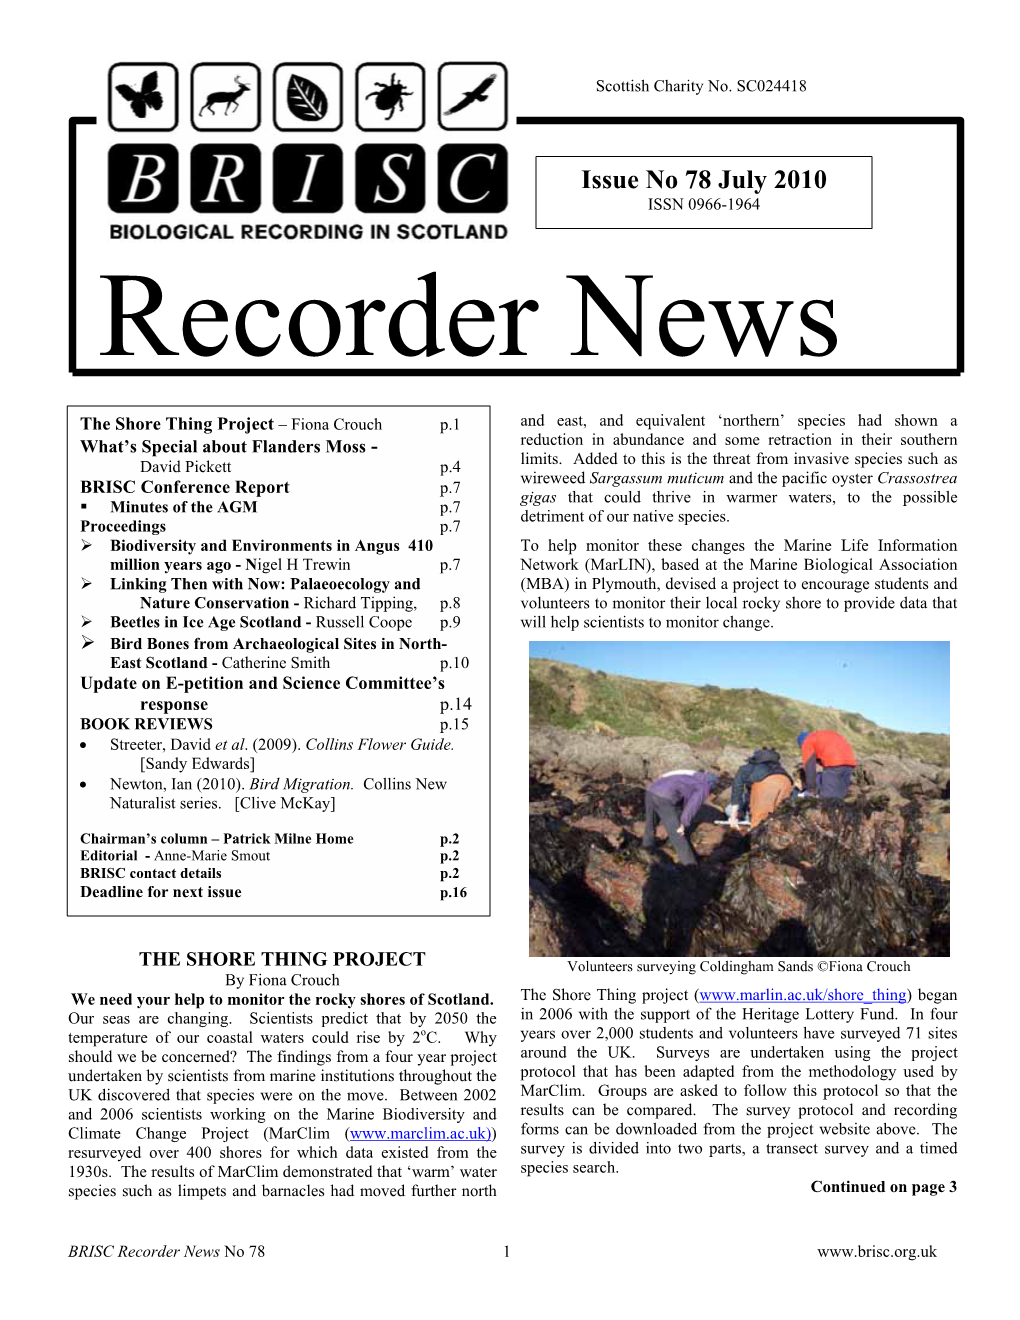 Recorder News No 78 1